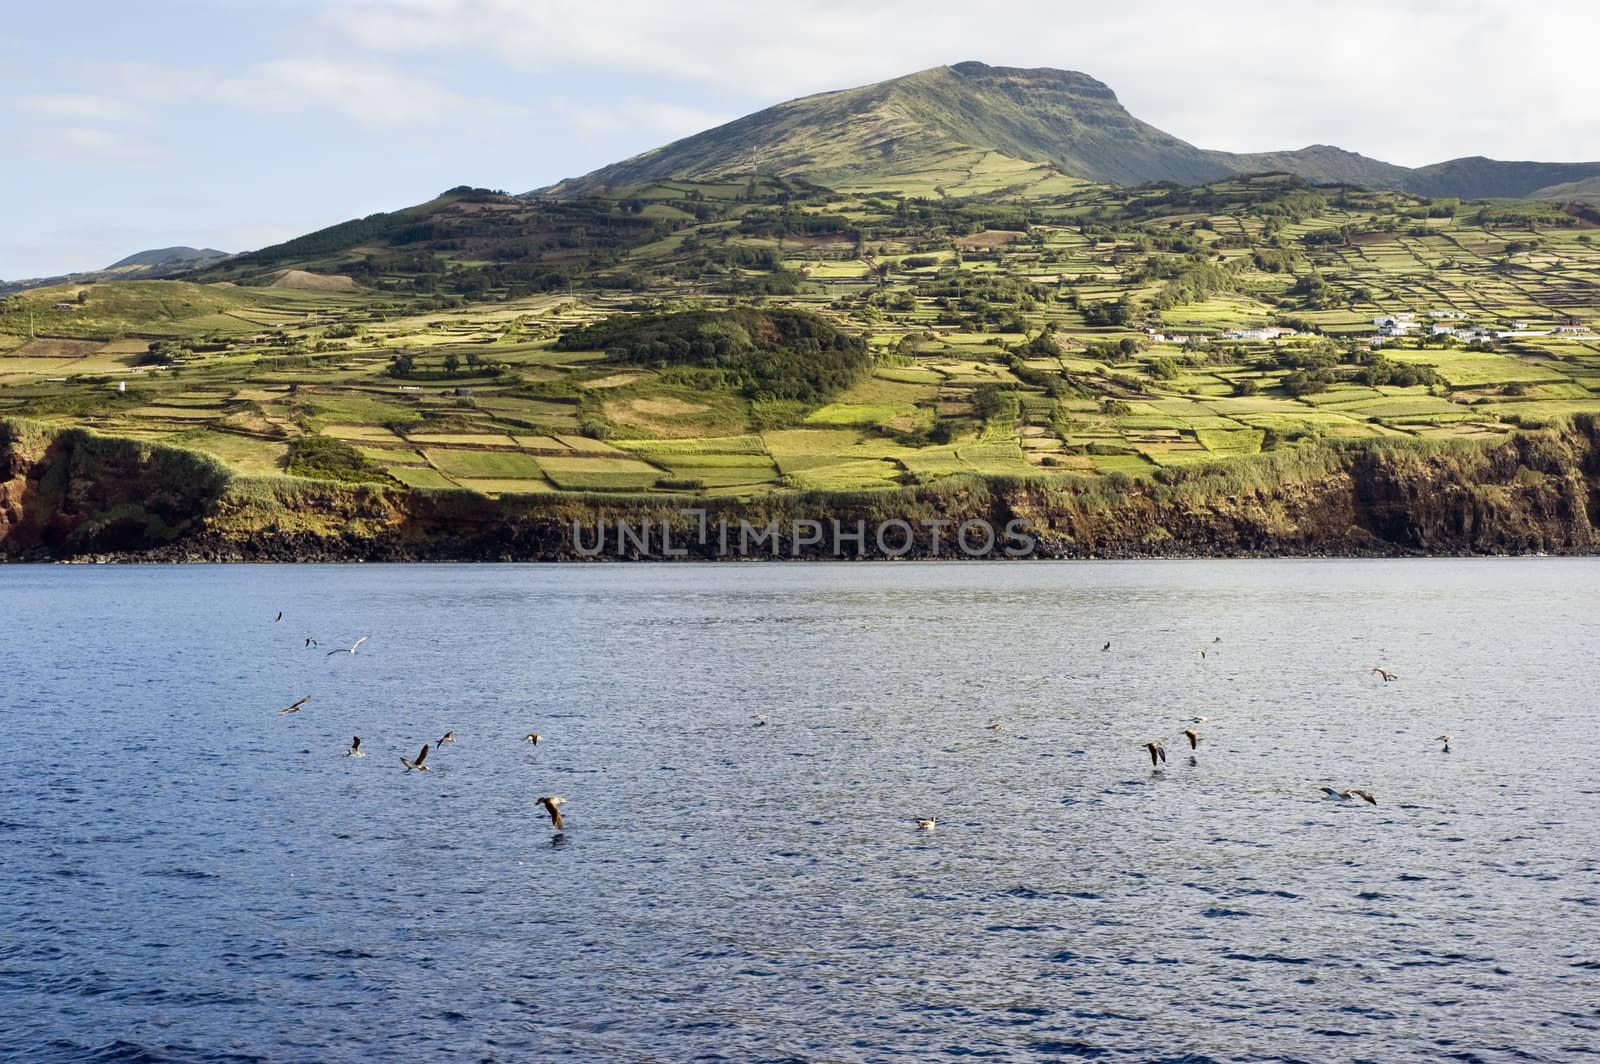 Rural landscape, Pico island, Azores by mrfotos